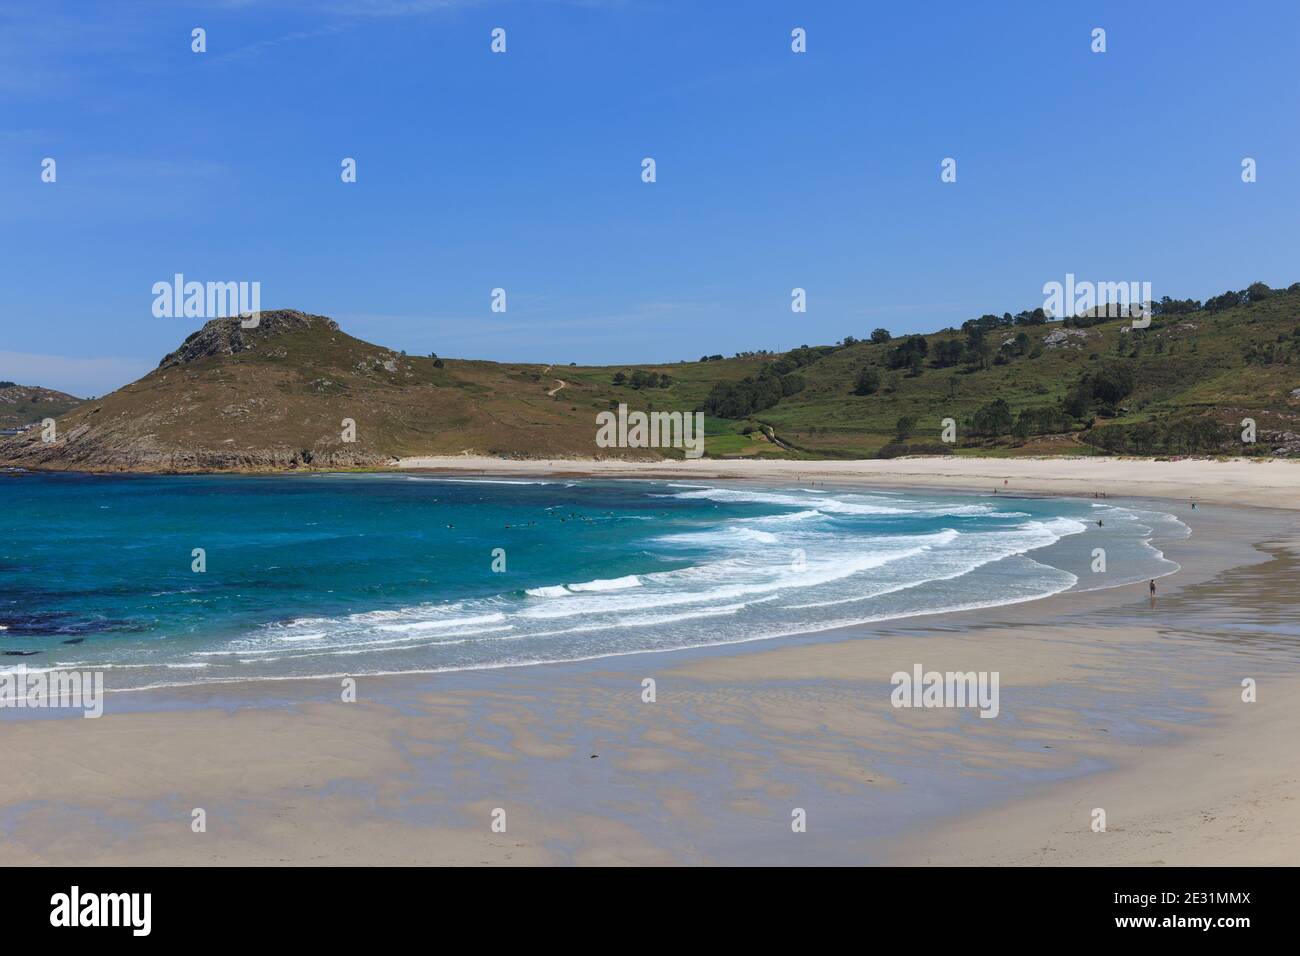 Spiaggia di Soesto (Praia de Soesto), la via faro da Laxe ad Alou, Galizia, la Coruña, Spagna Foto Stock